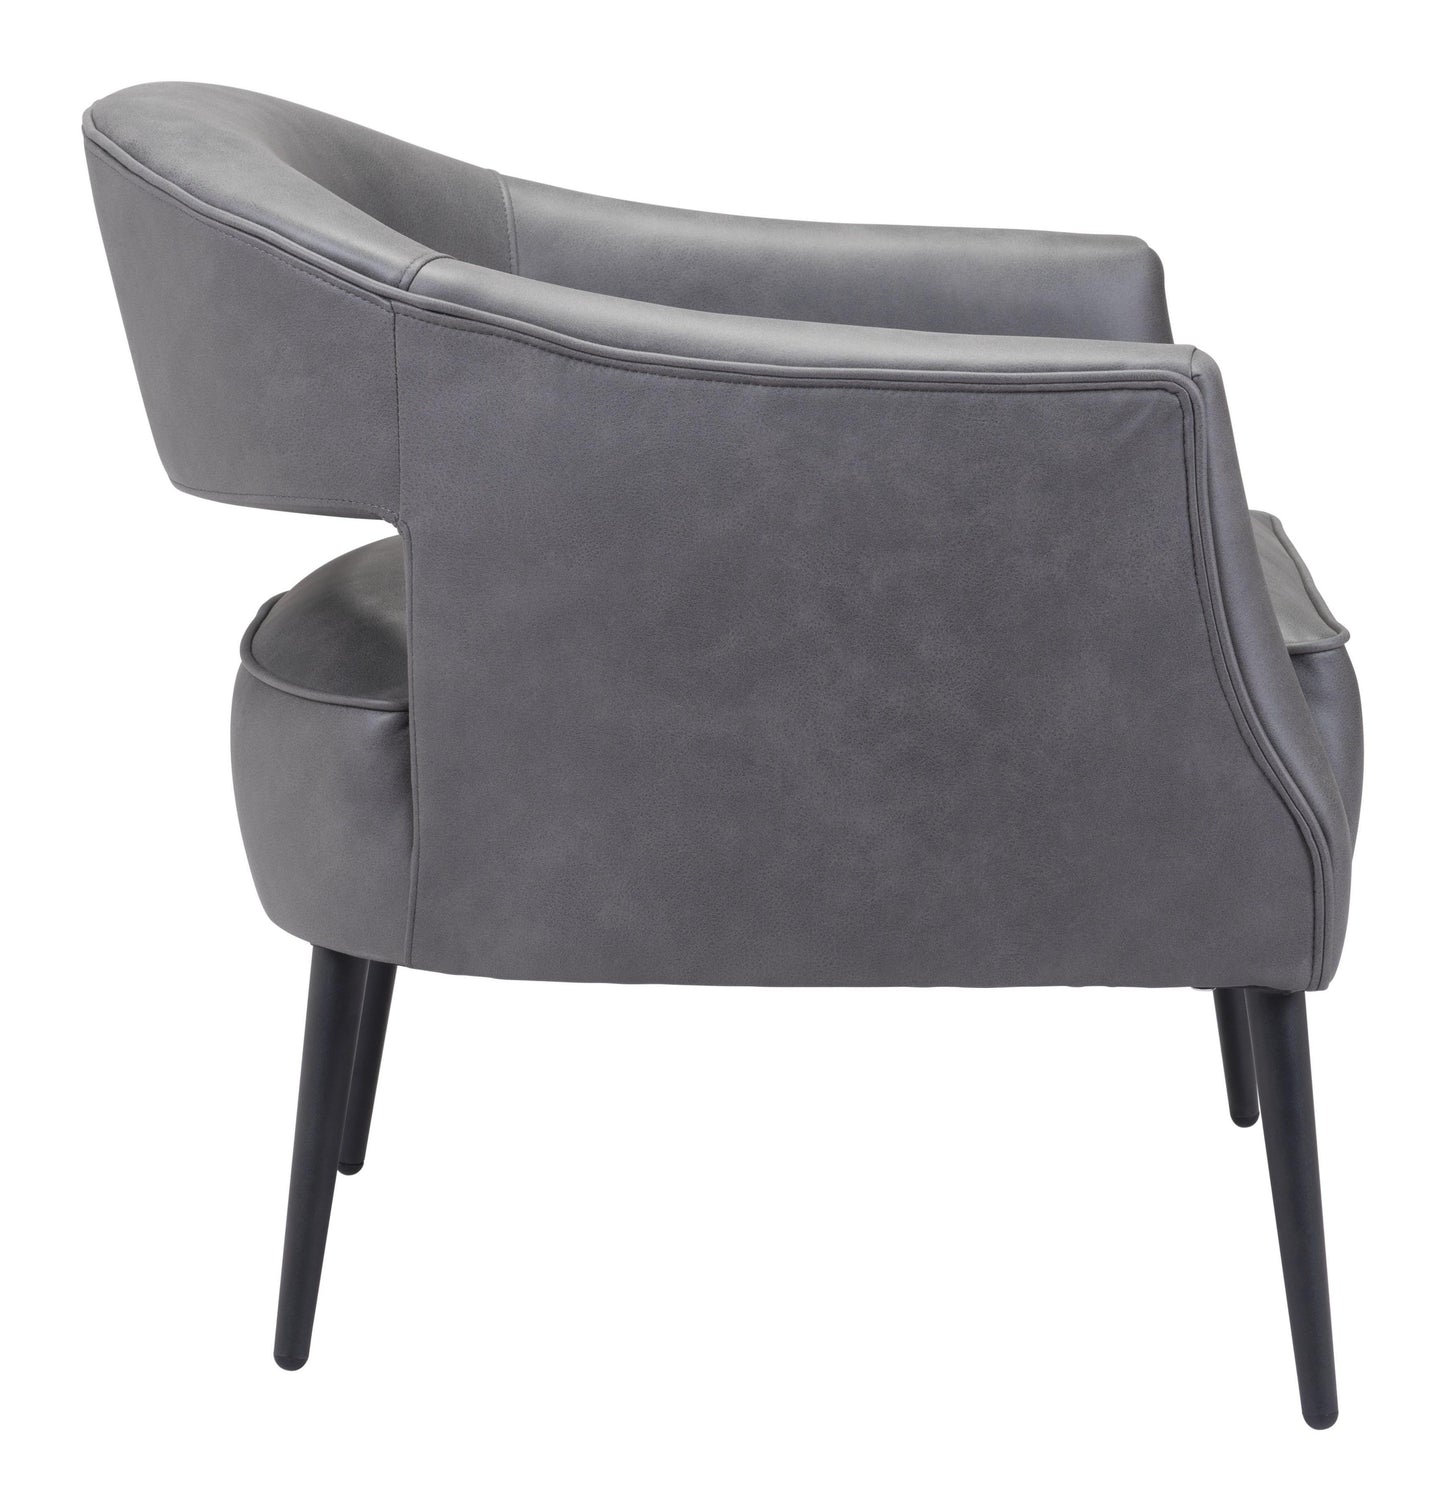 Berkeley Accent Chair Vintage Gray